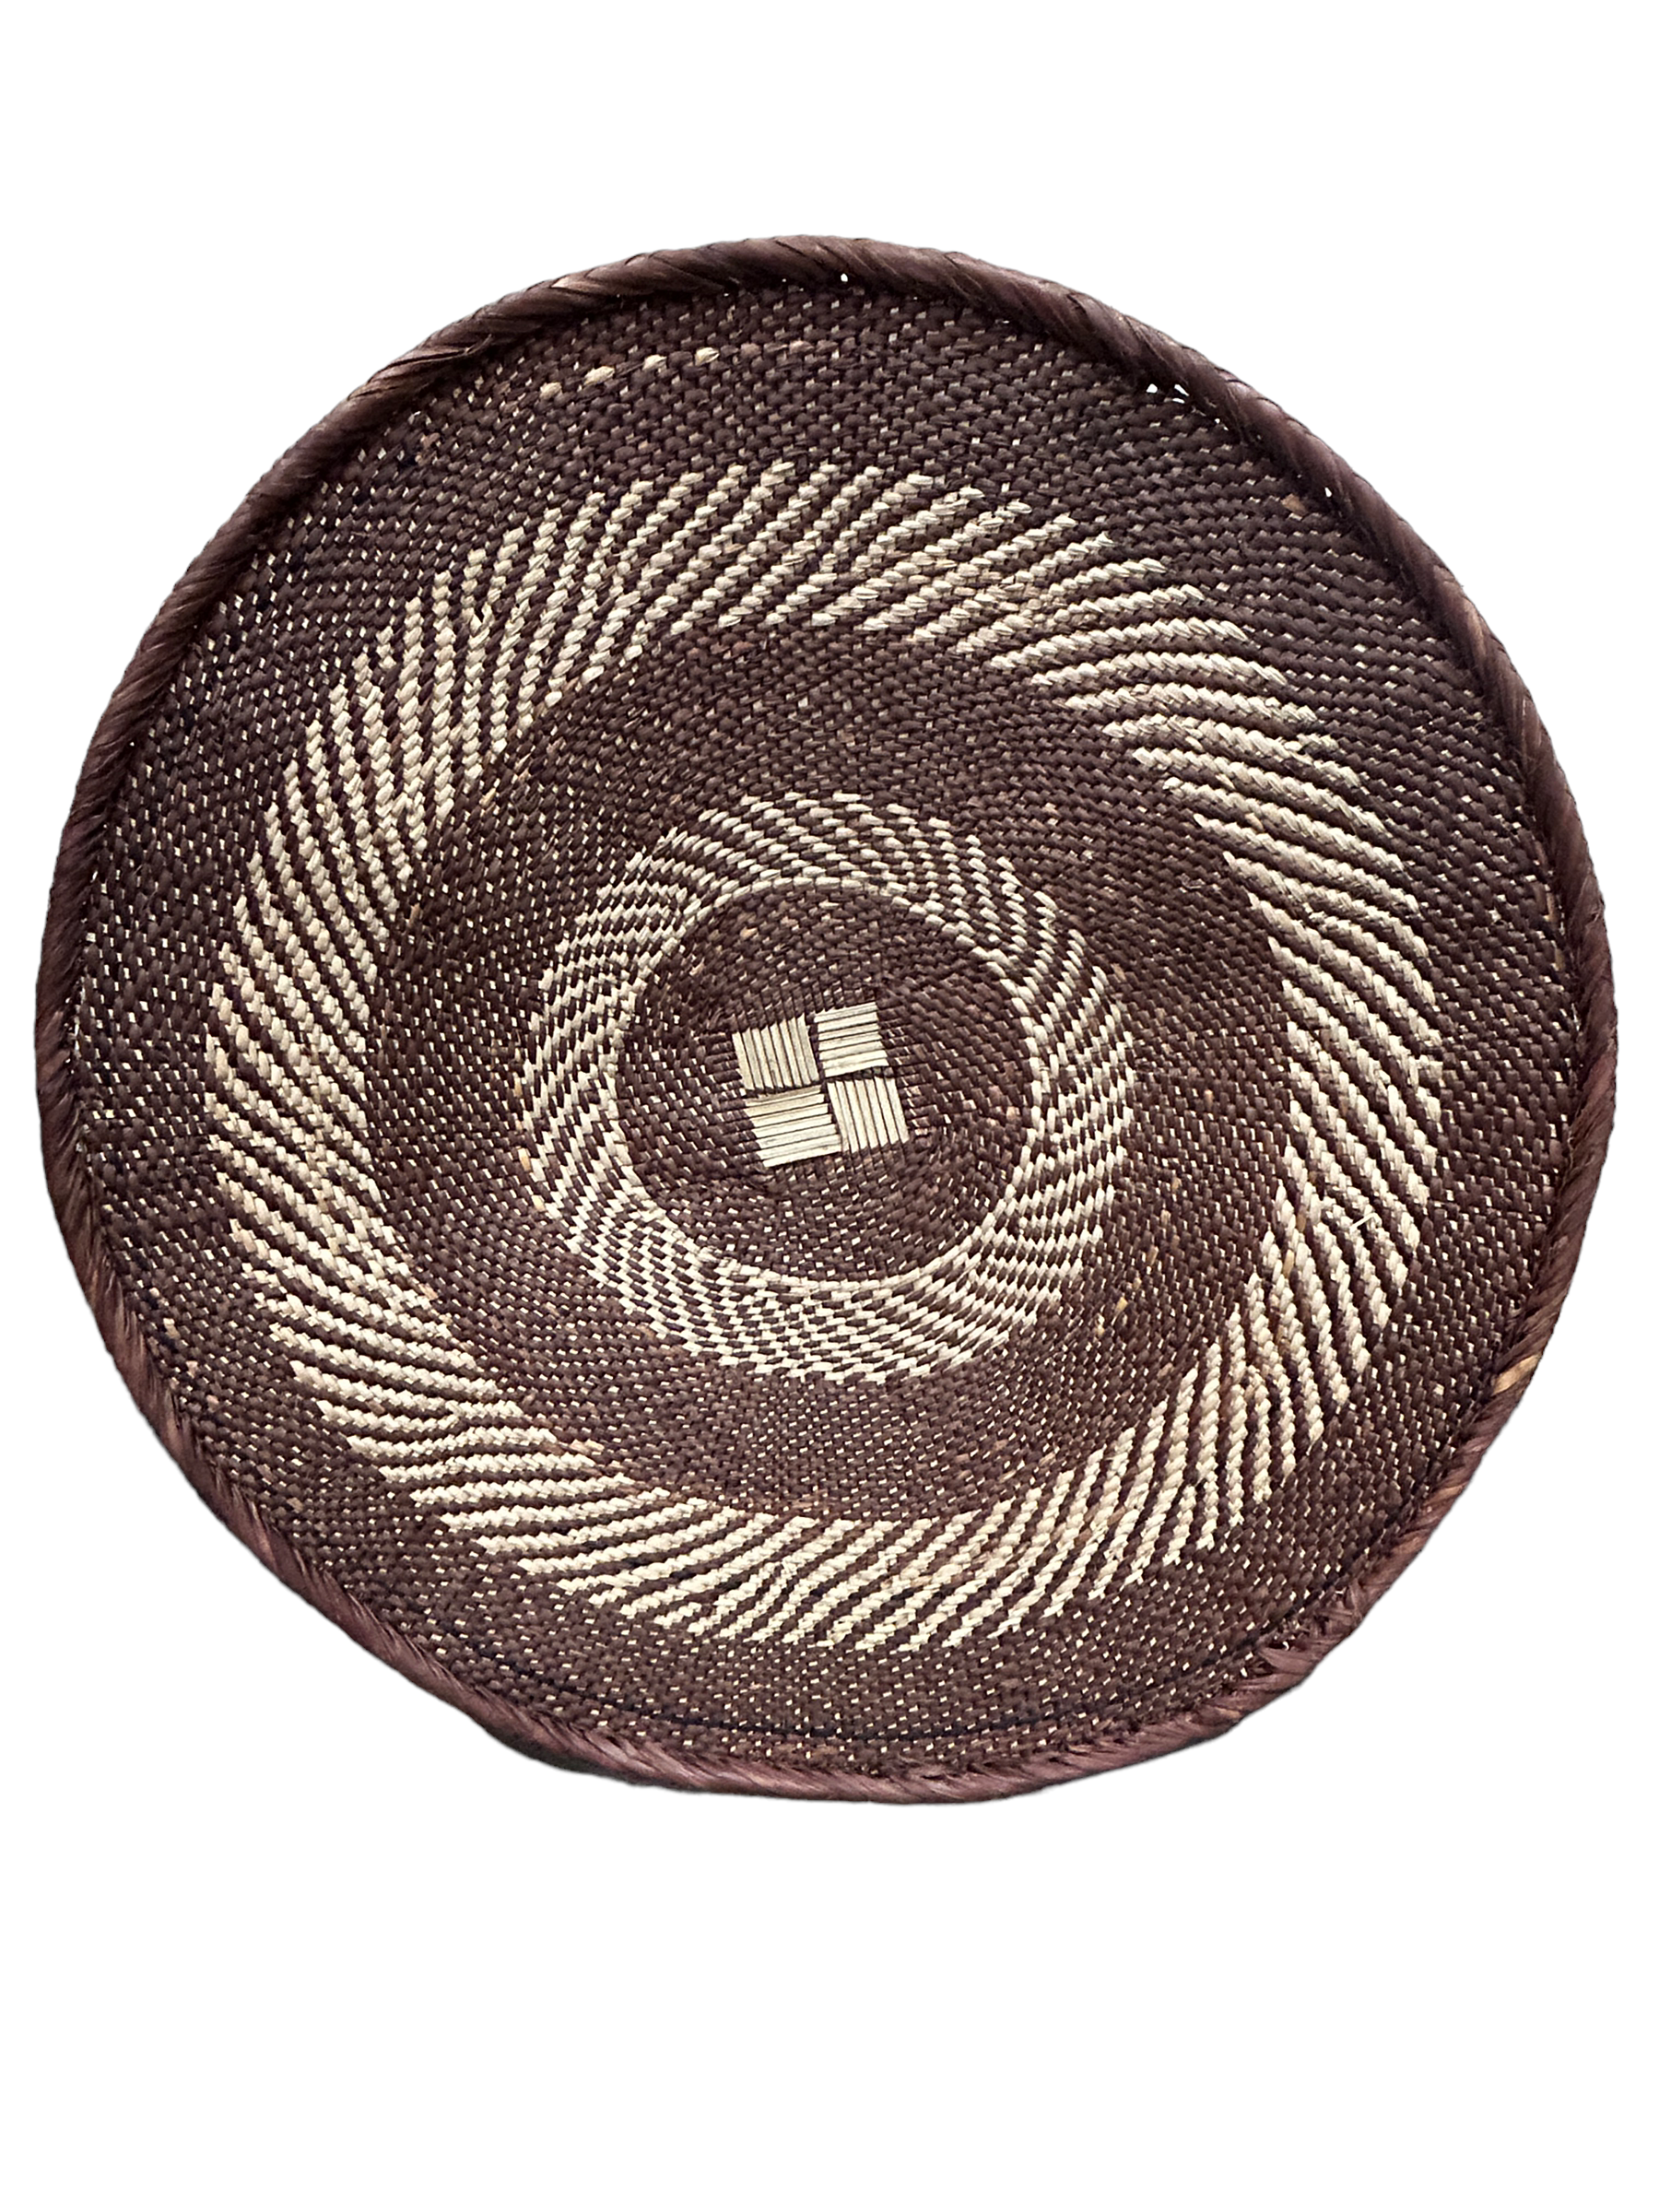 botanicalboysuk Tonga Basket Natural (60-04)